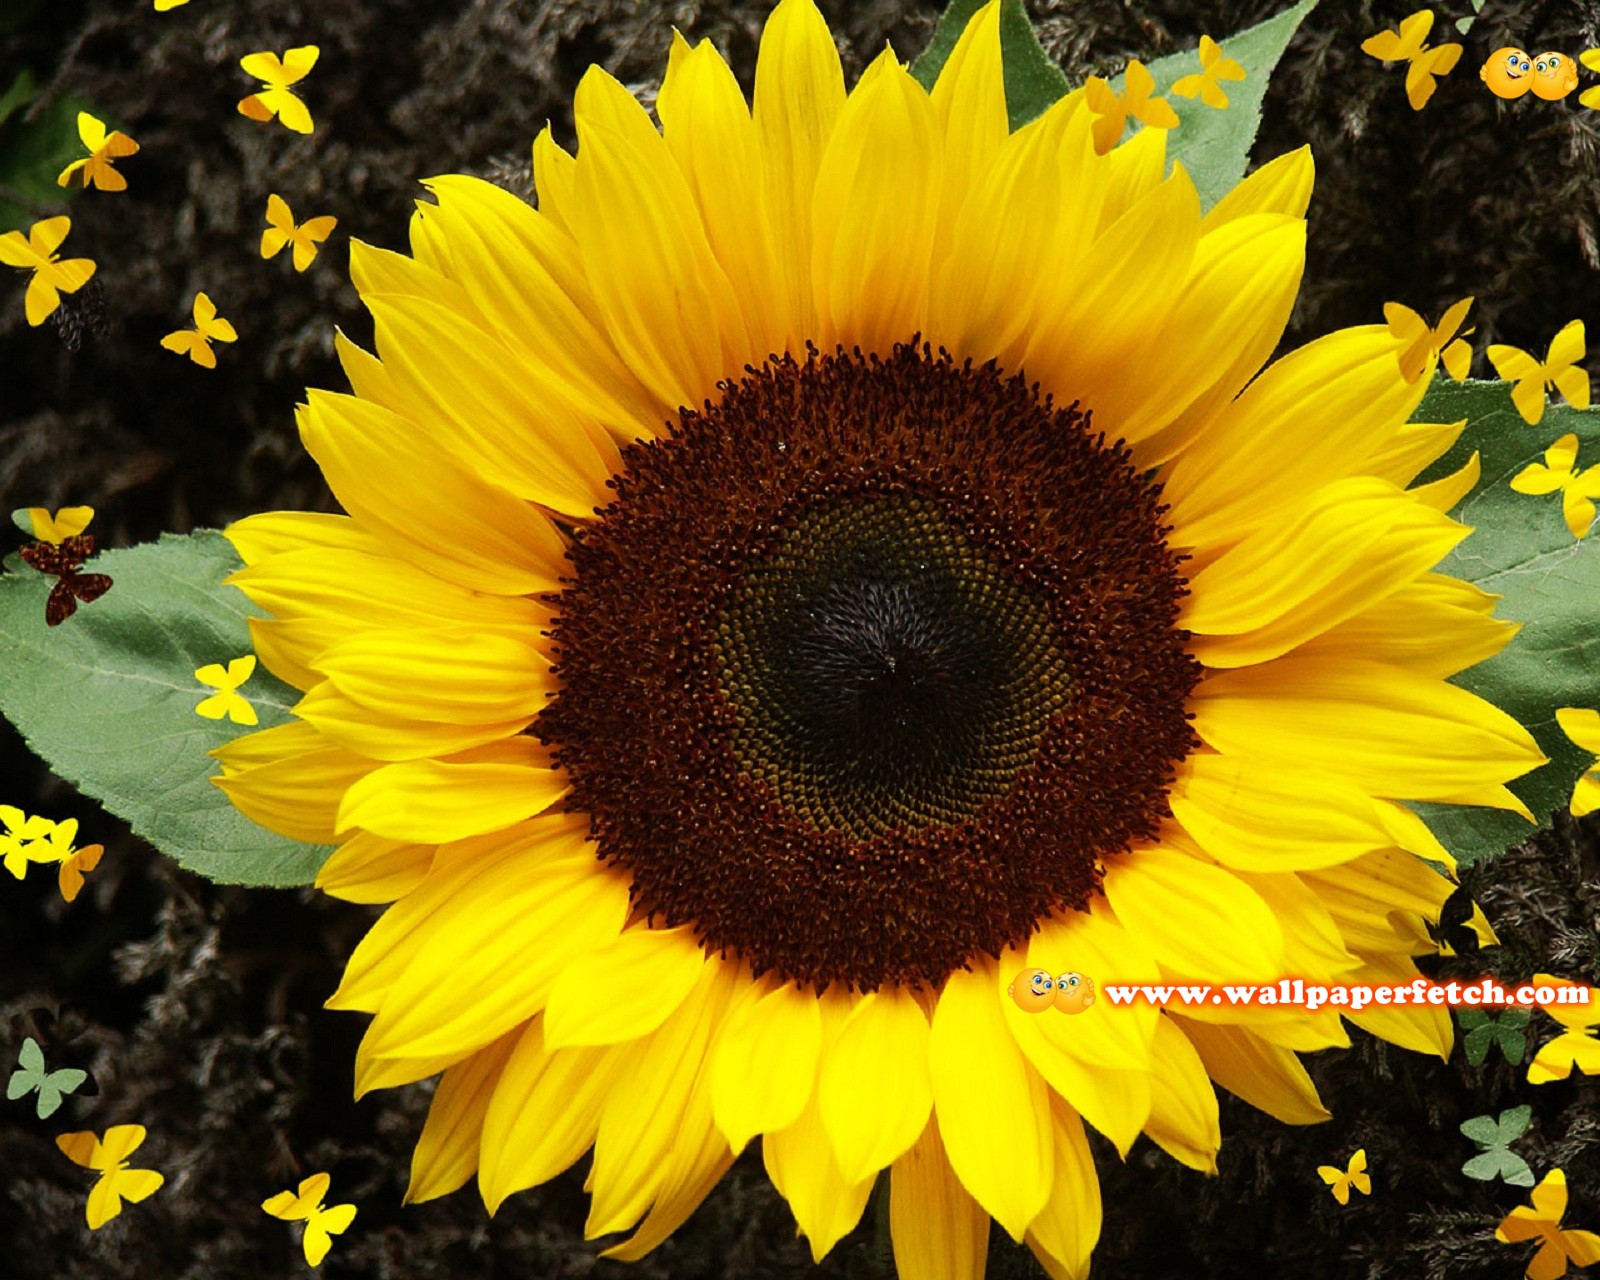 The Wallpapers UK: 40 Beautiful Sun Flower HD Wallpapers